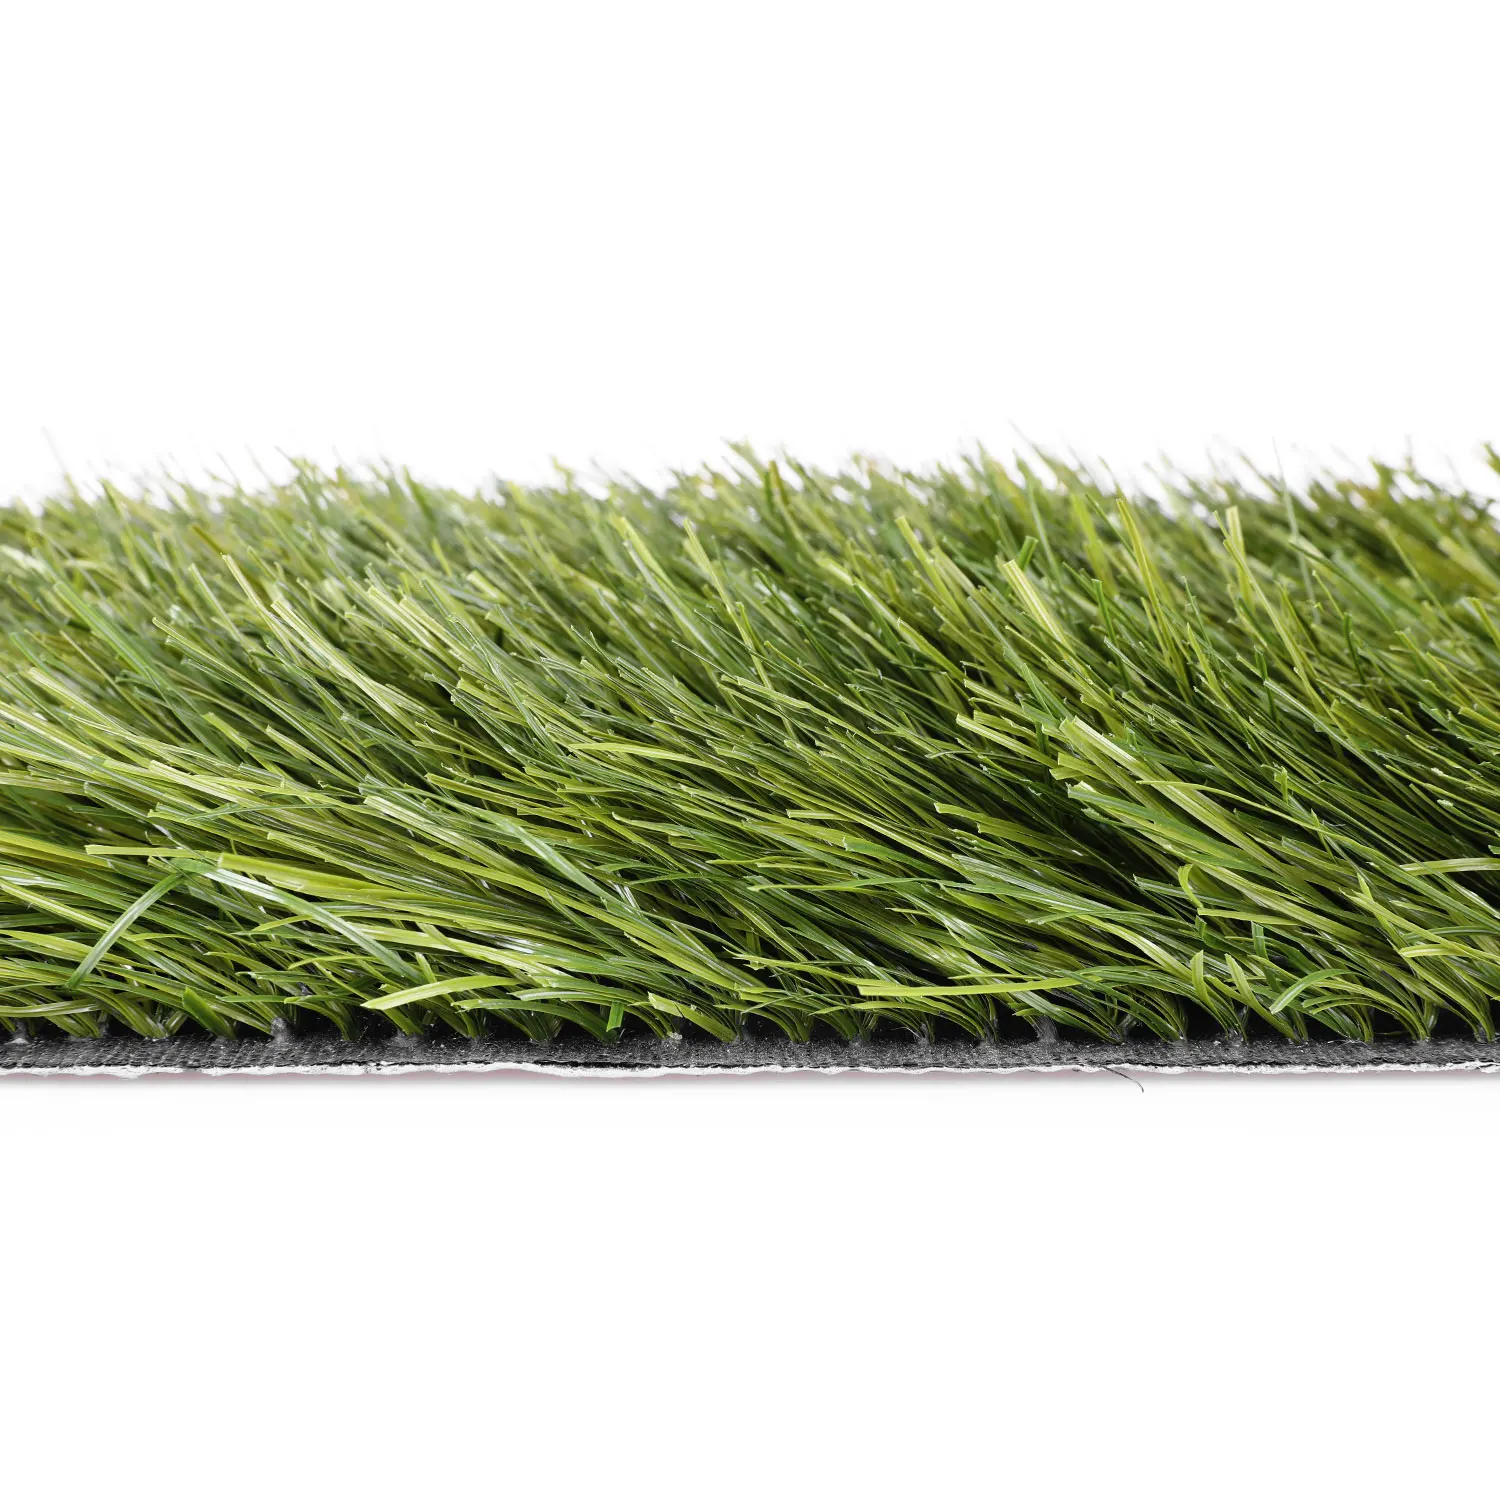 

60mm FIFA approved football&soccer artificial grass soccer turf carpet